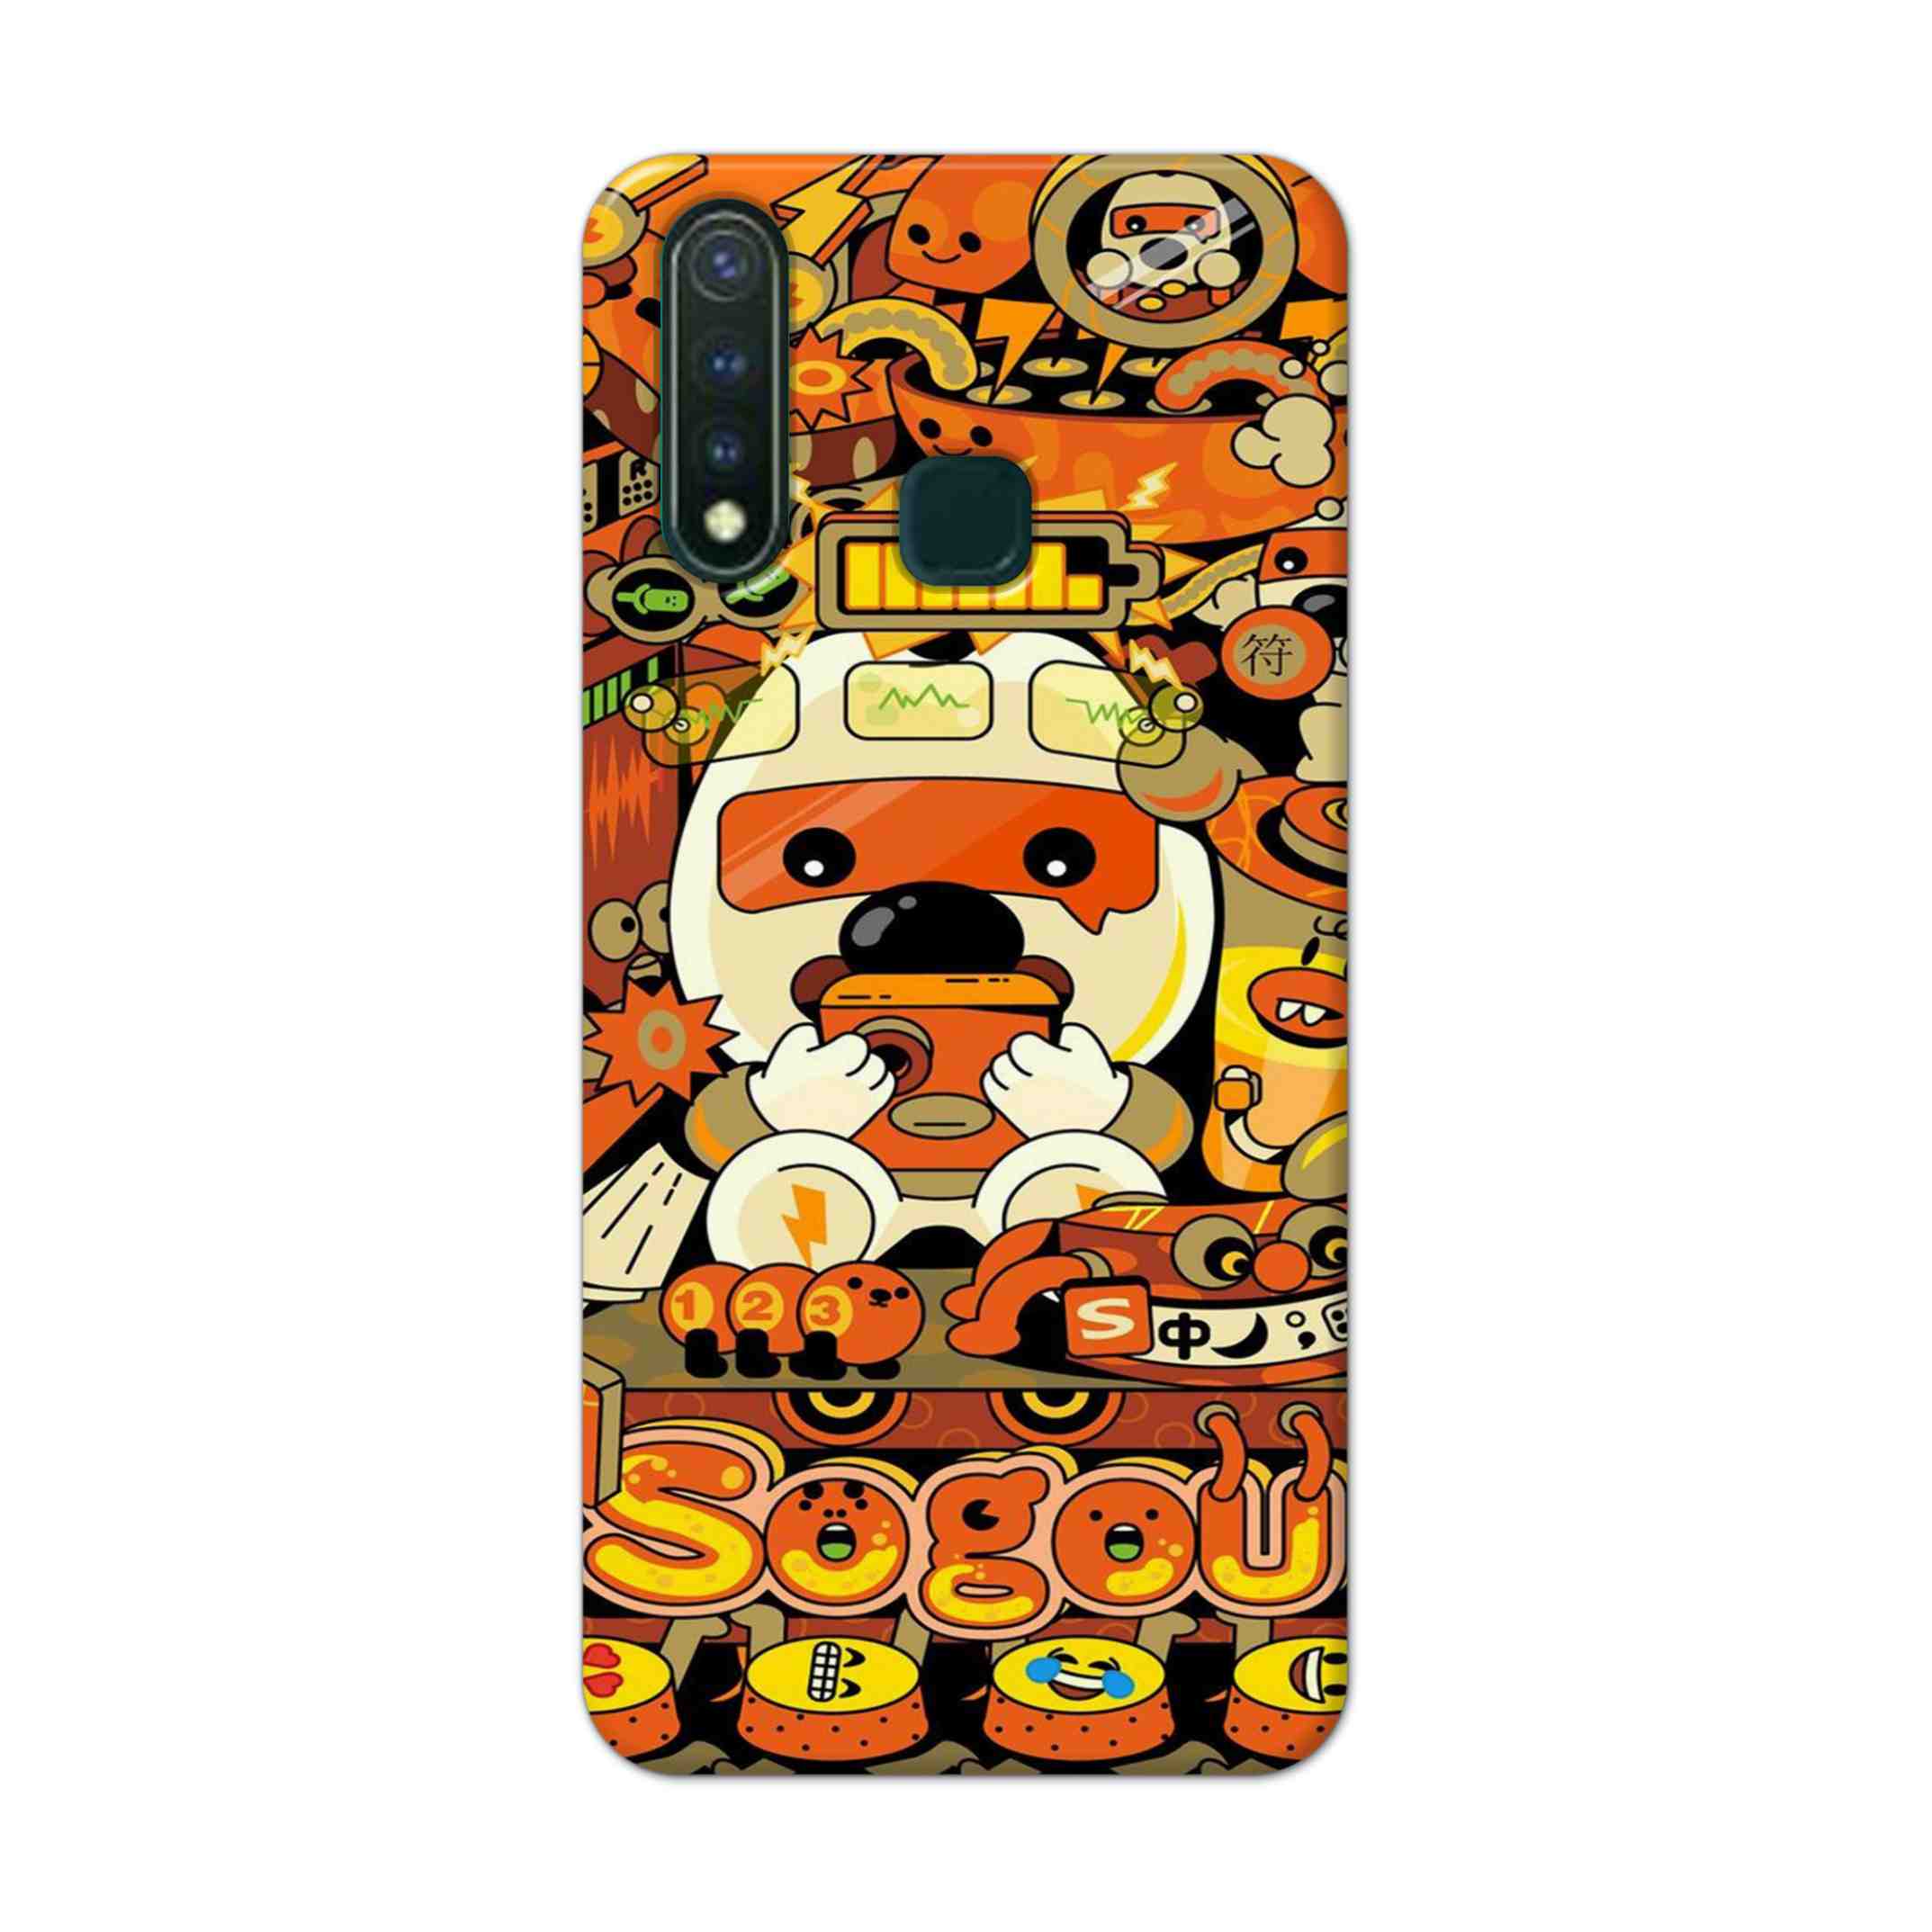 Buy Sogou Hard Back Mobile Phone Case Cover For Vivo U20 Online